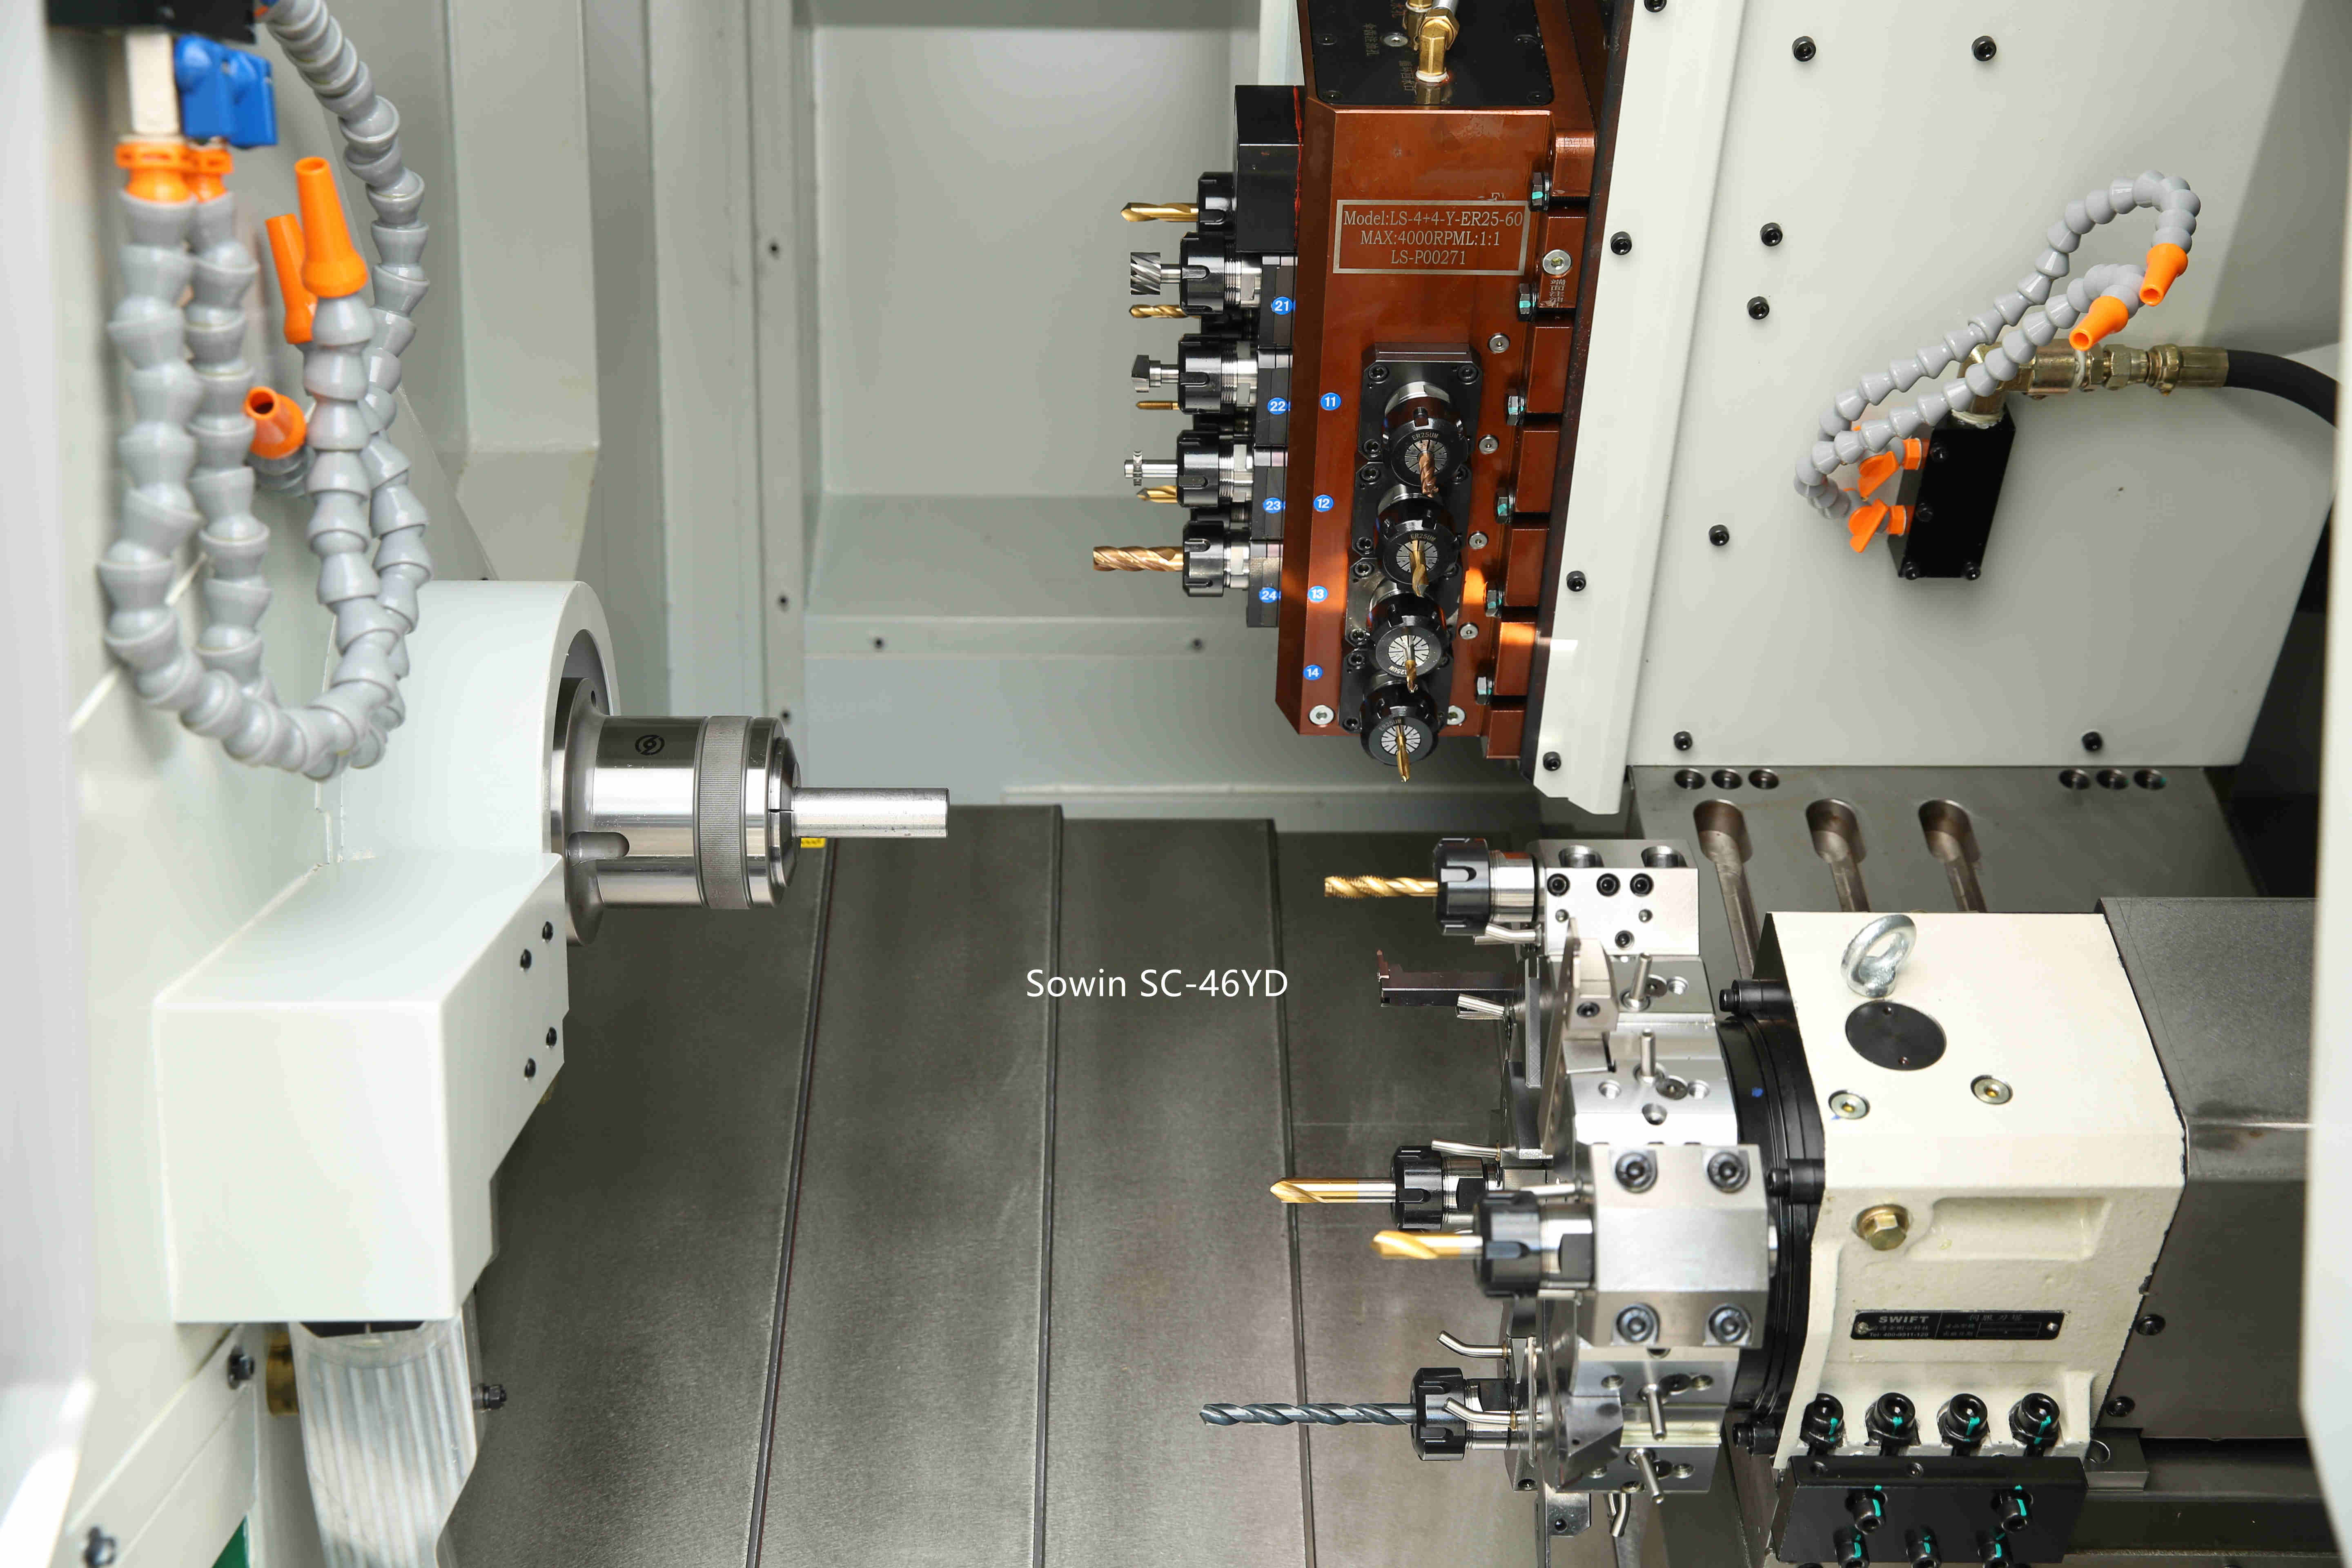 Model SC-46YD Slant bed CNC turn mill lathe